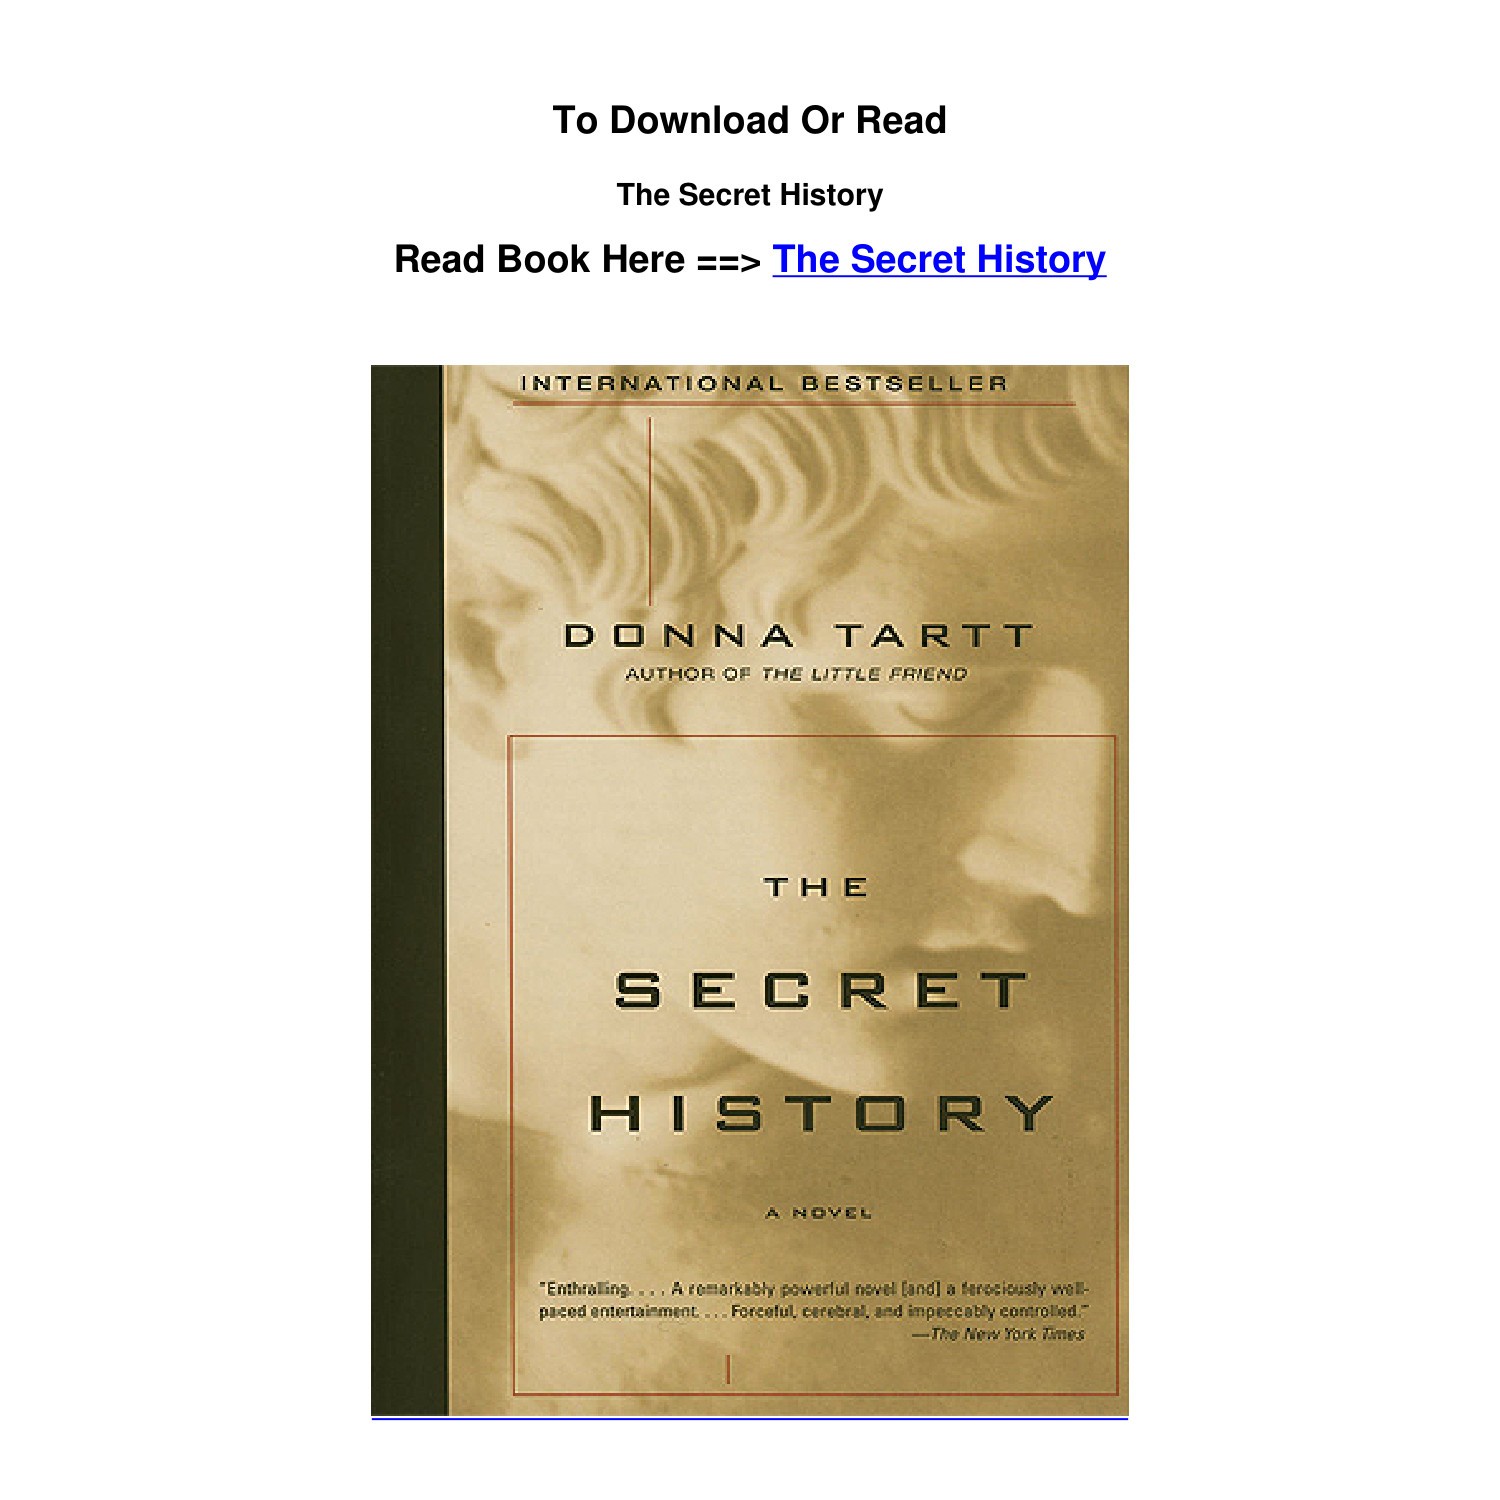 PDF DOWNLOAD The Secret History by Donna Tartt.pdf